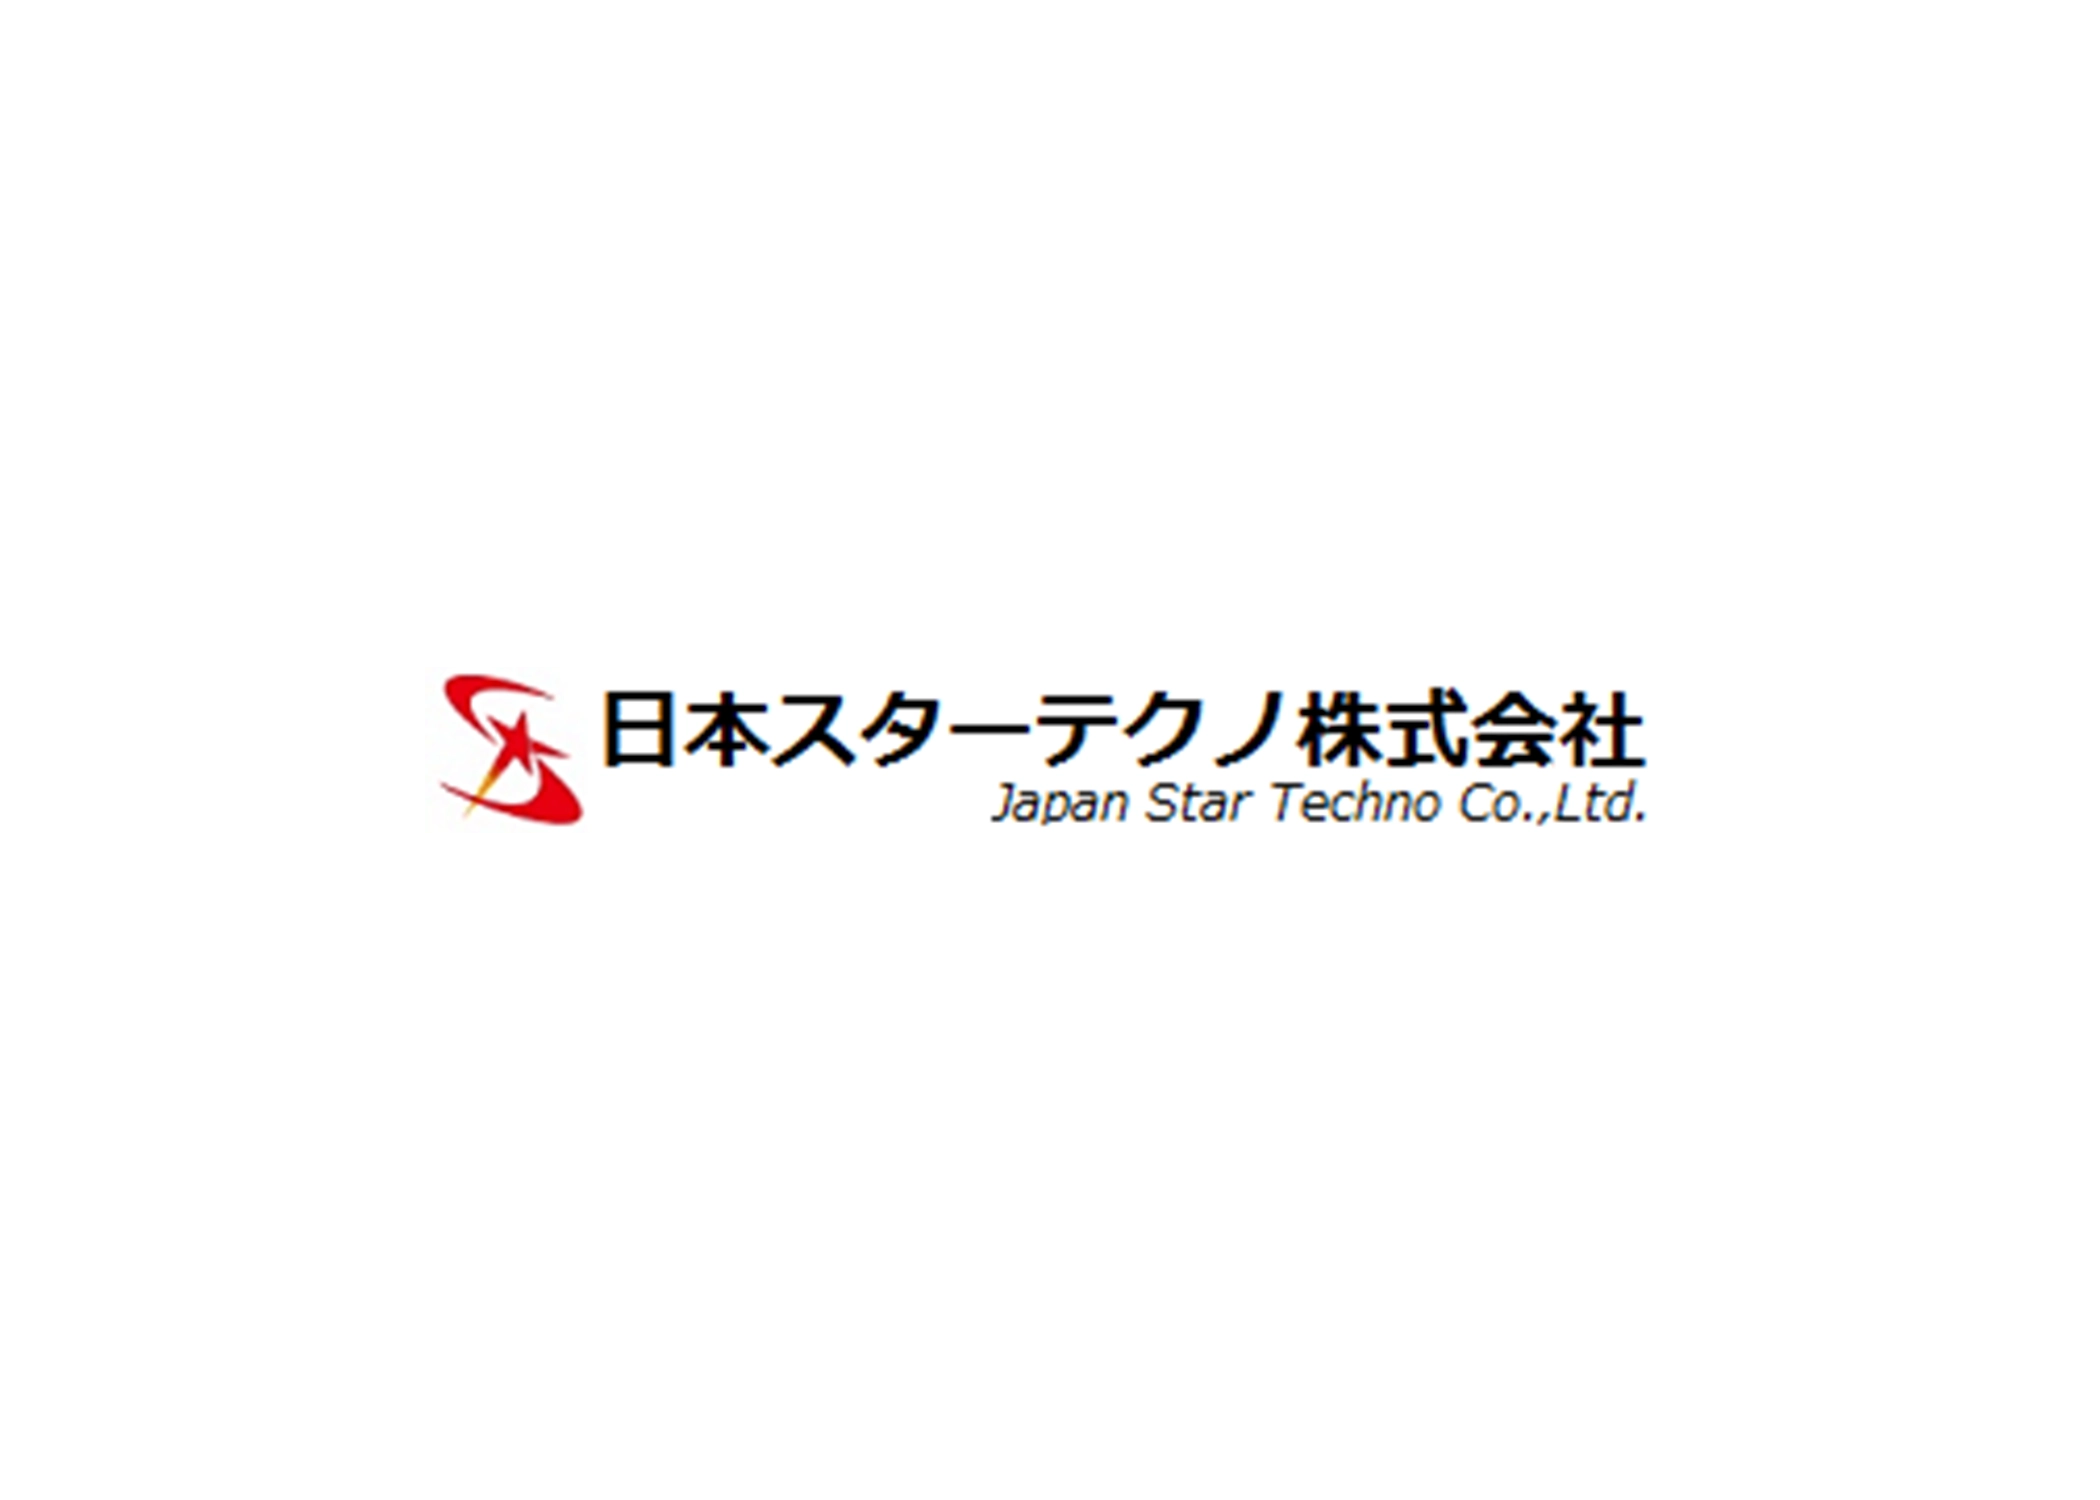 Japan Star Techno logo